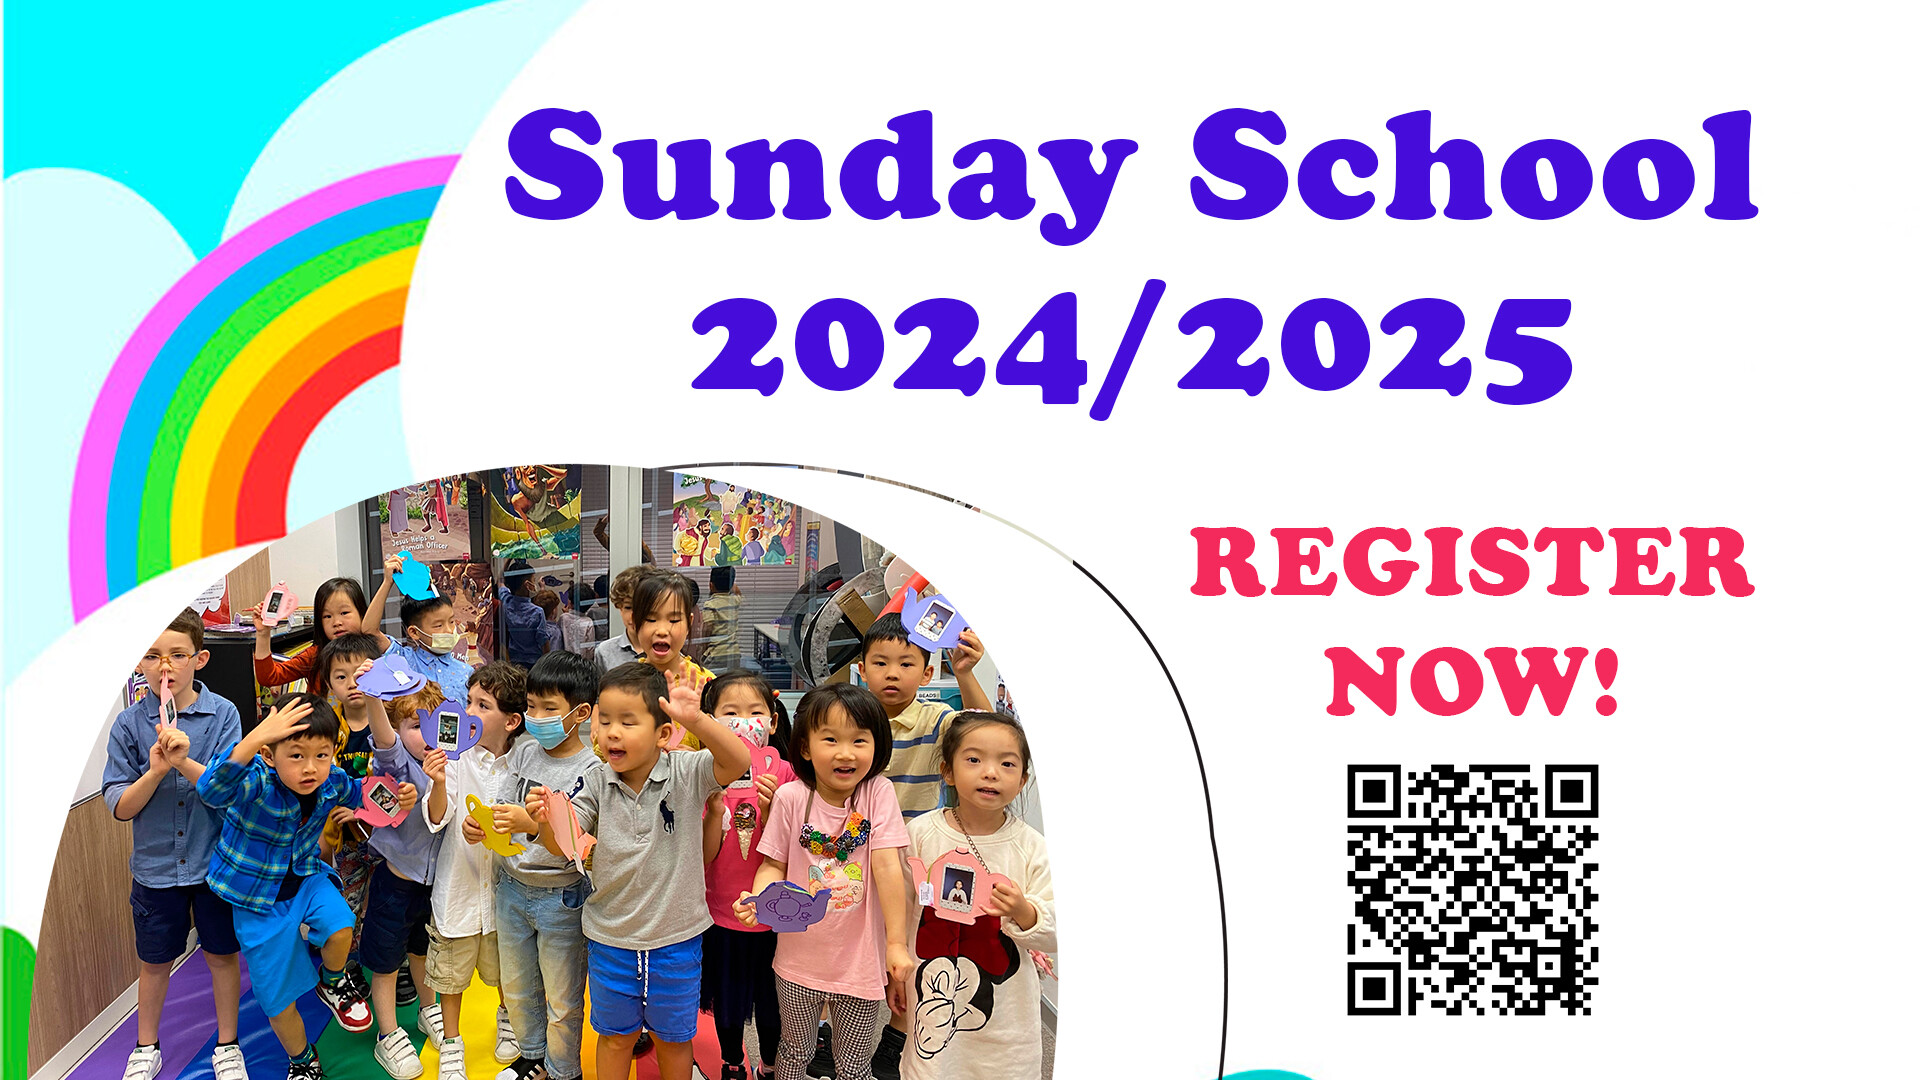 Sunday School registration